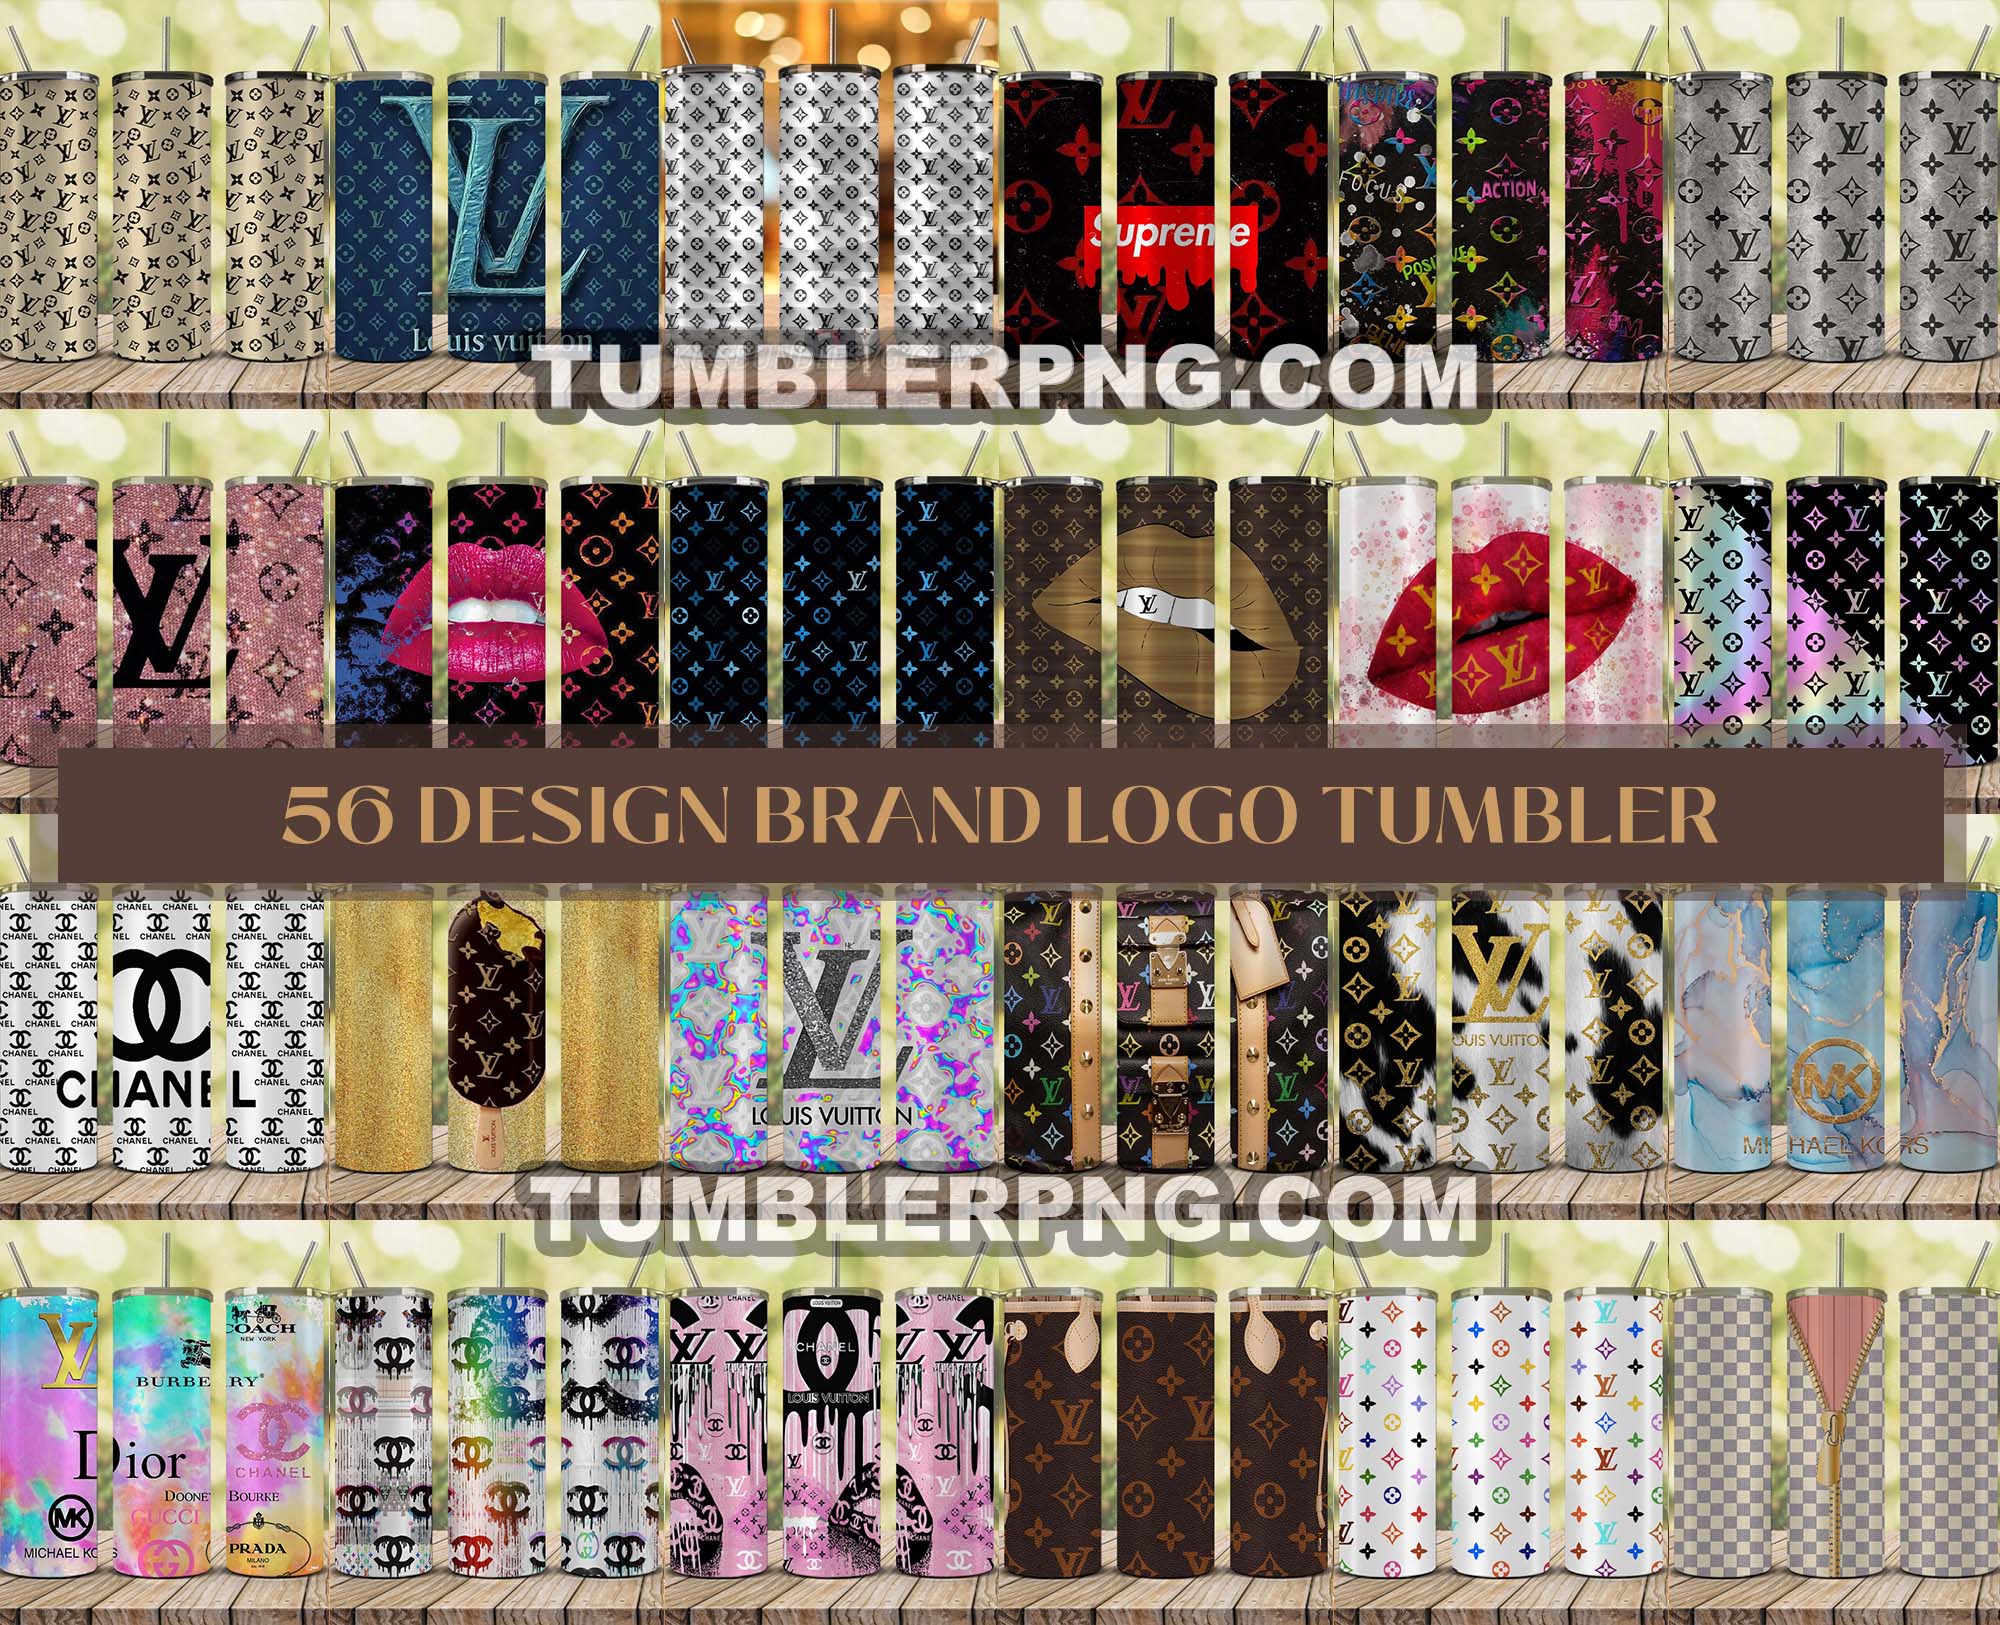 6 Louis Vuitton Tumblers 20oz Skinny Bundle Png - free svg files